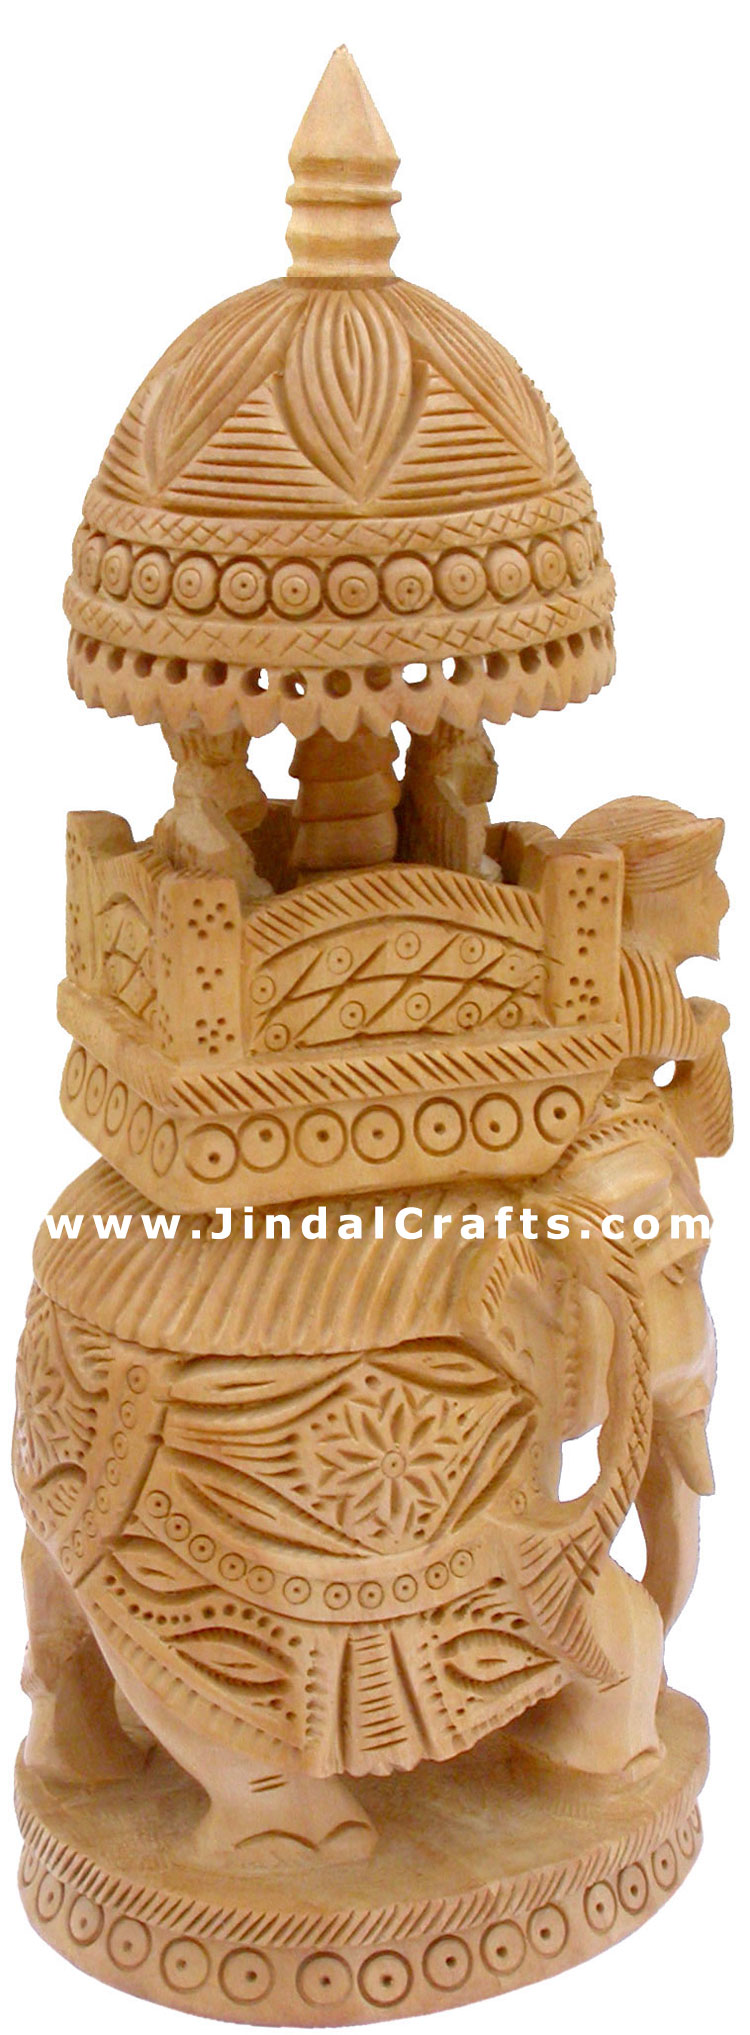 Hand Carved Wooden Royal King's Jungle Safari India Art